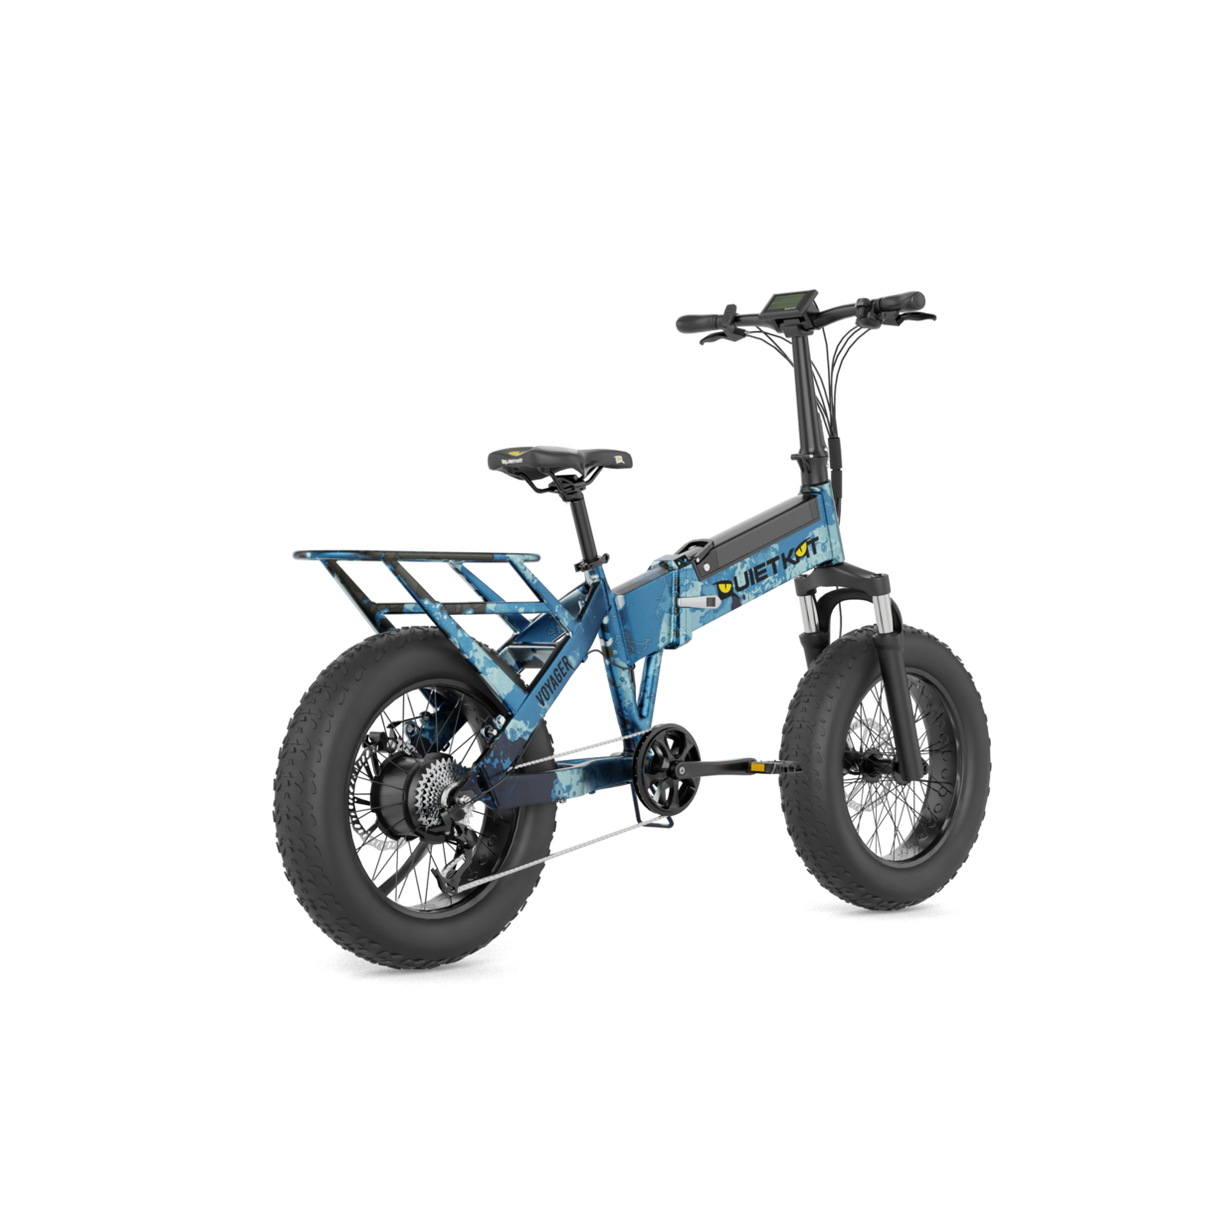 QuiteKat Voyager Off-Road Fat Tire Folding Electric Bike - E-Wheel Warehouse